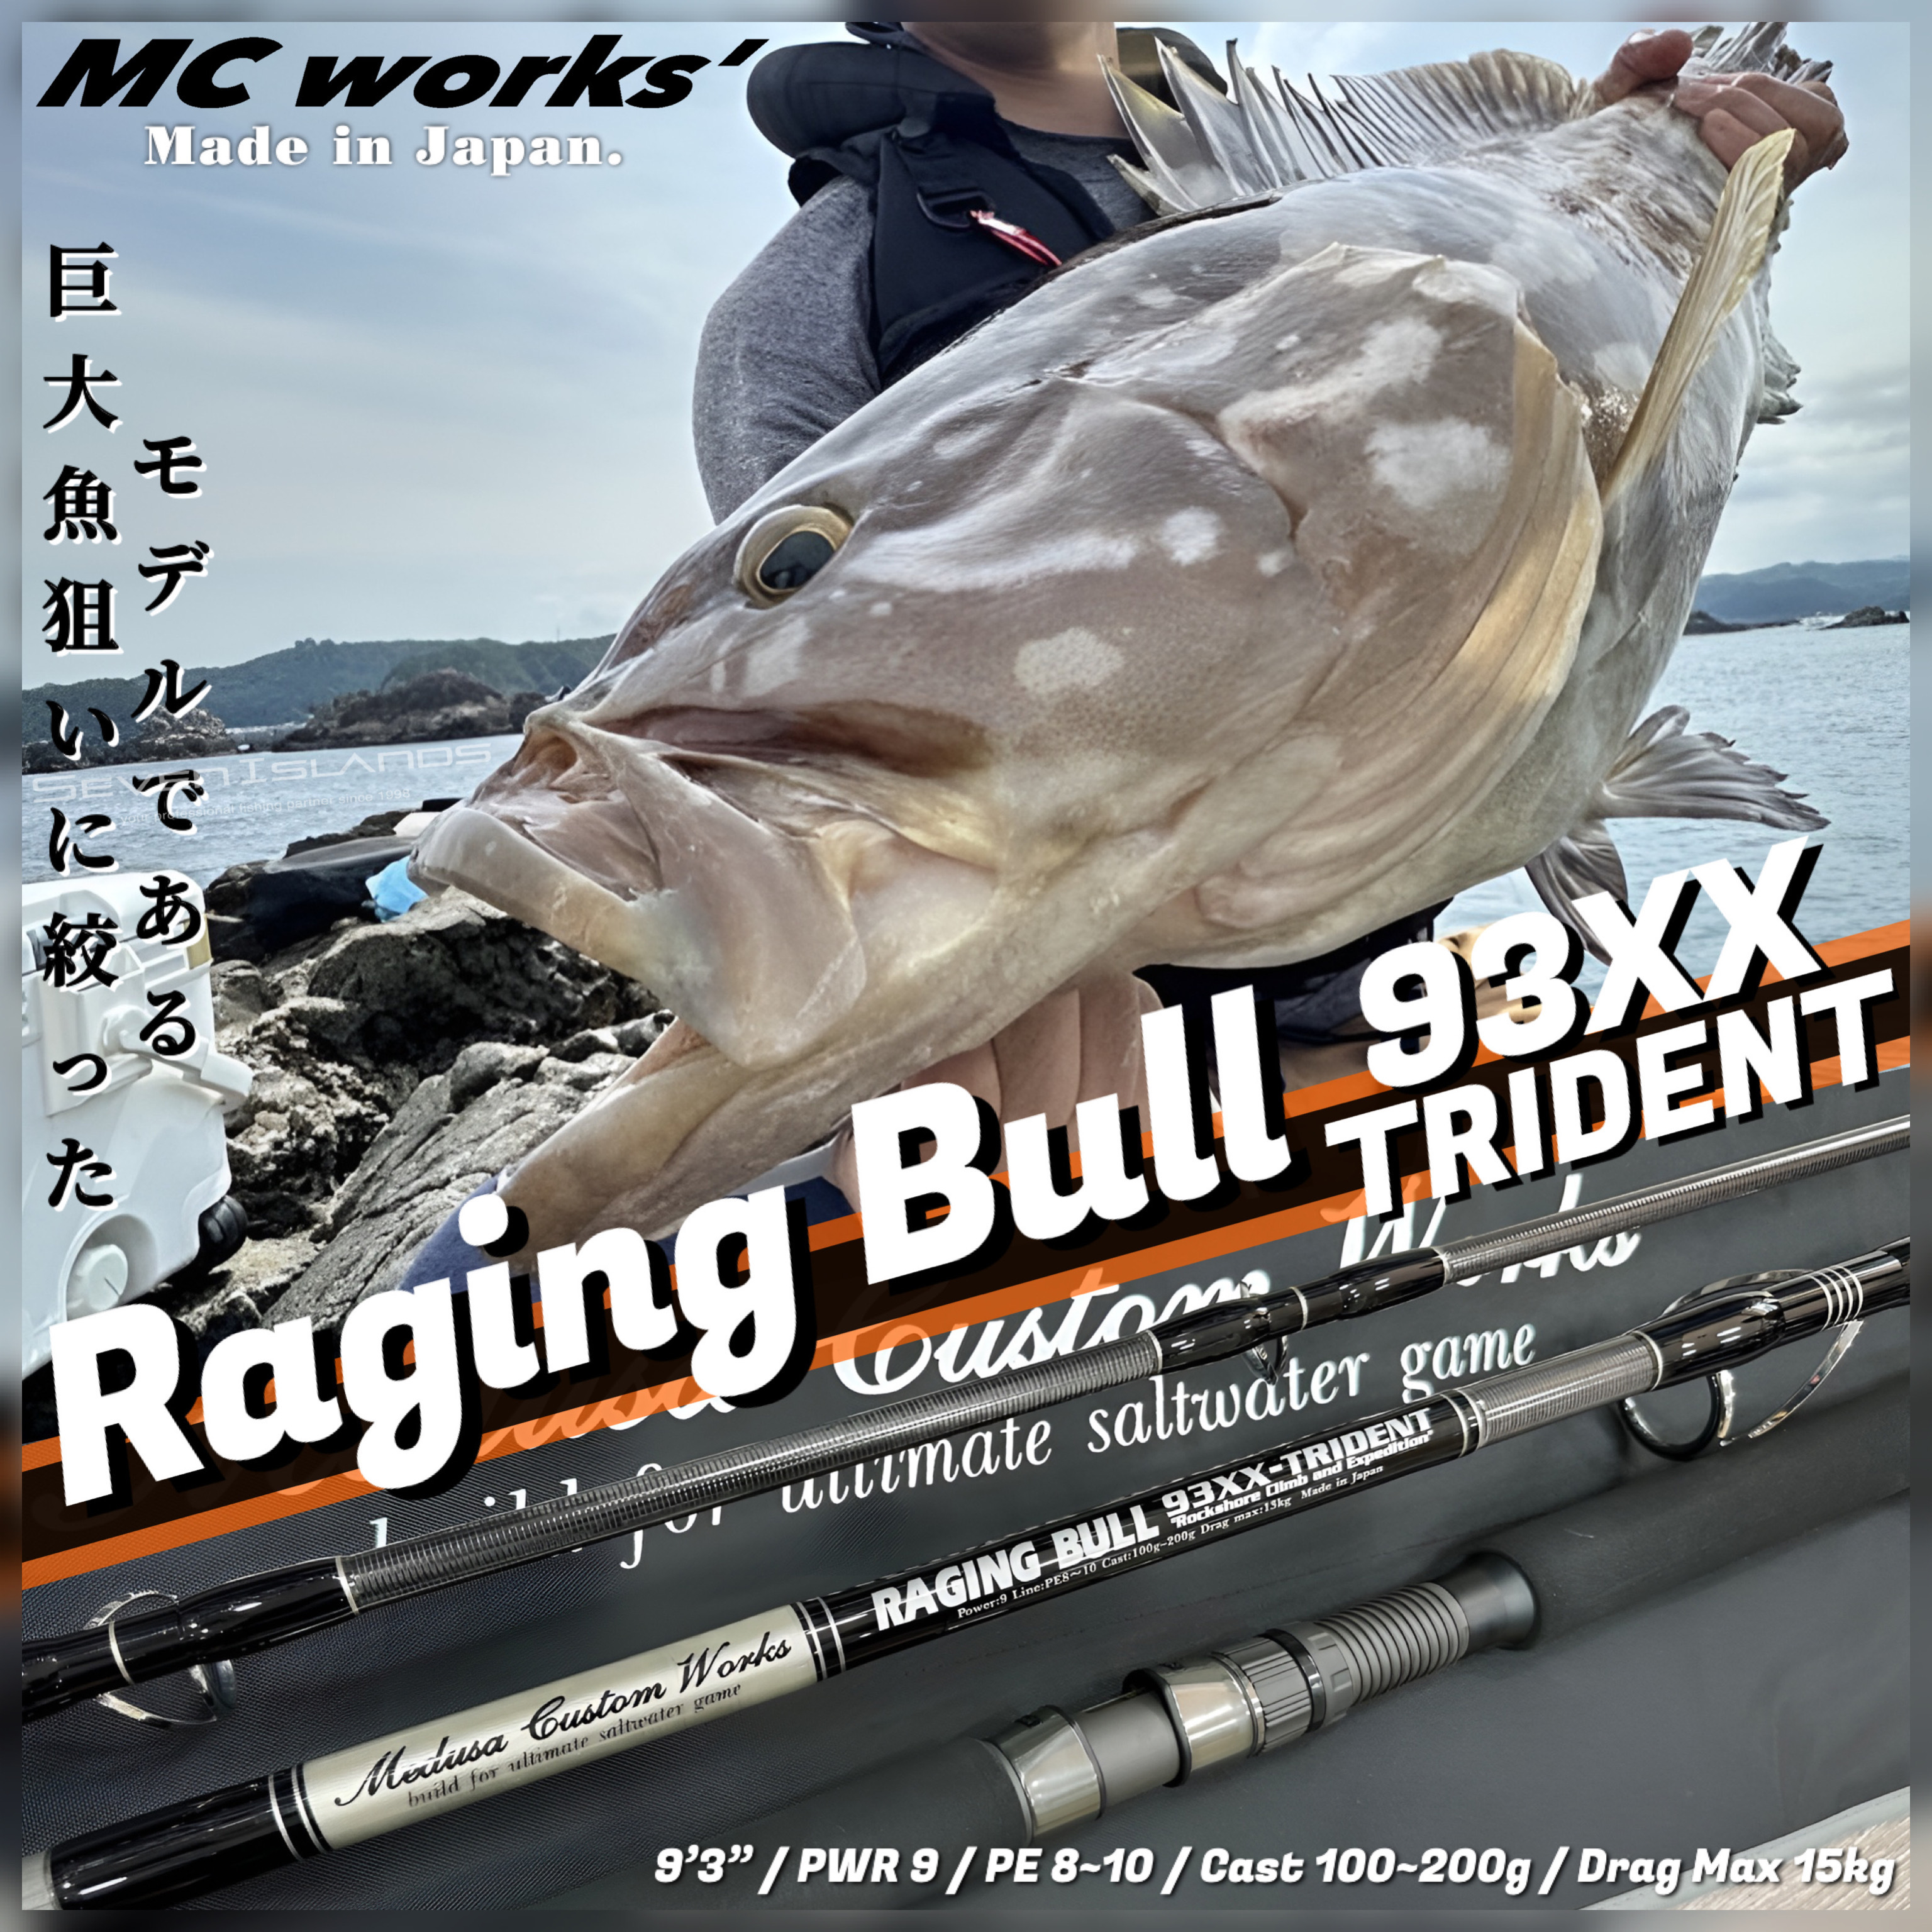 MC WORKS' RAGING BULL RB93XX-Trident